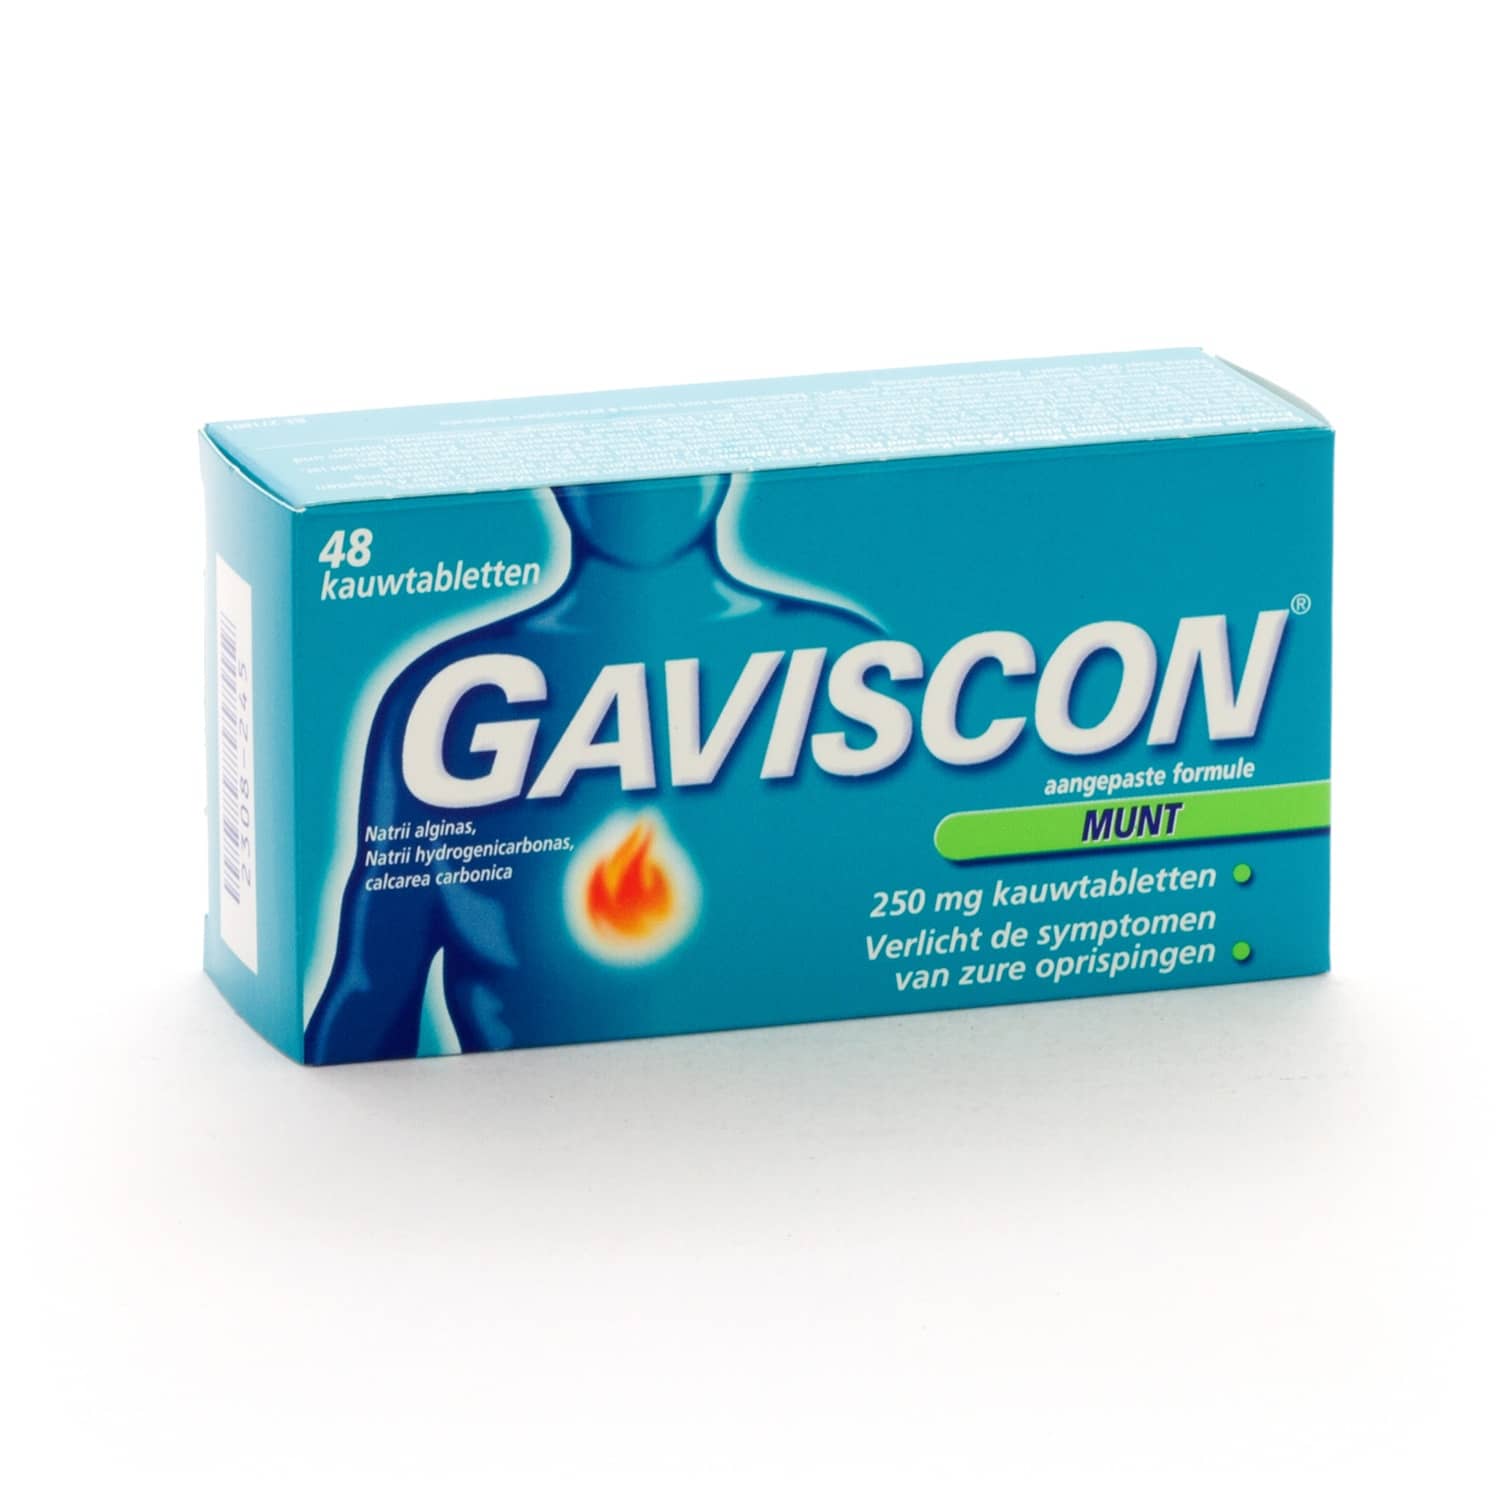 Gaviscon Munt